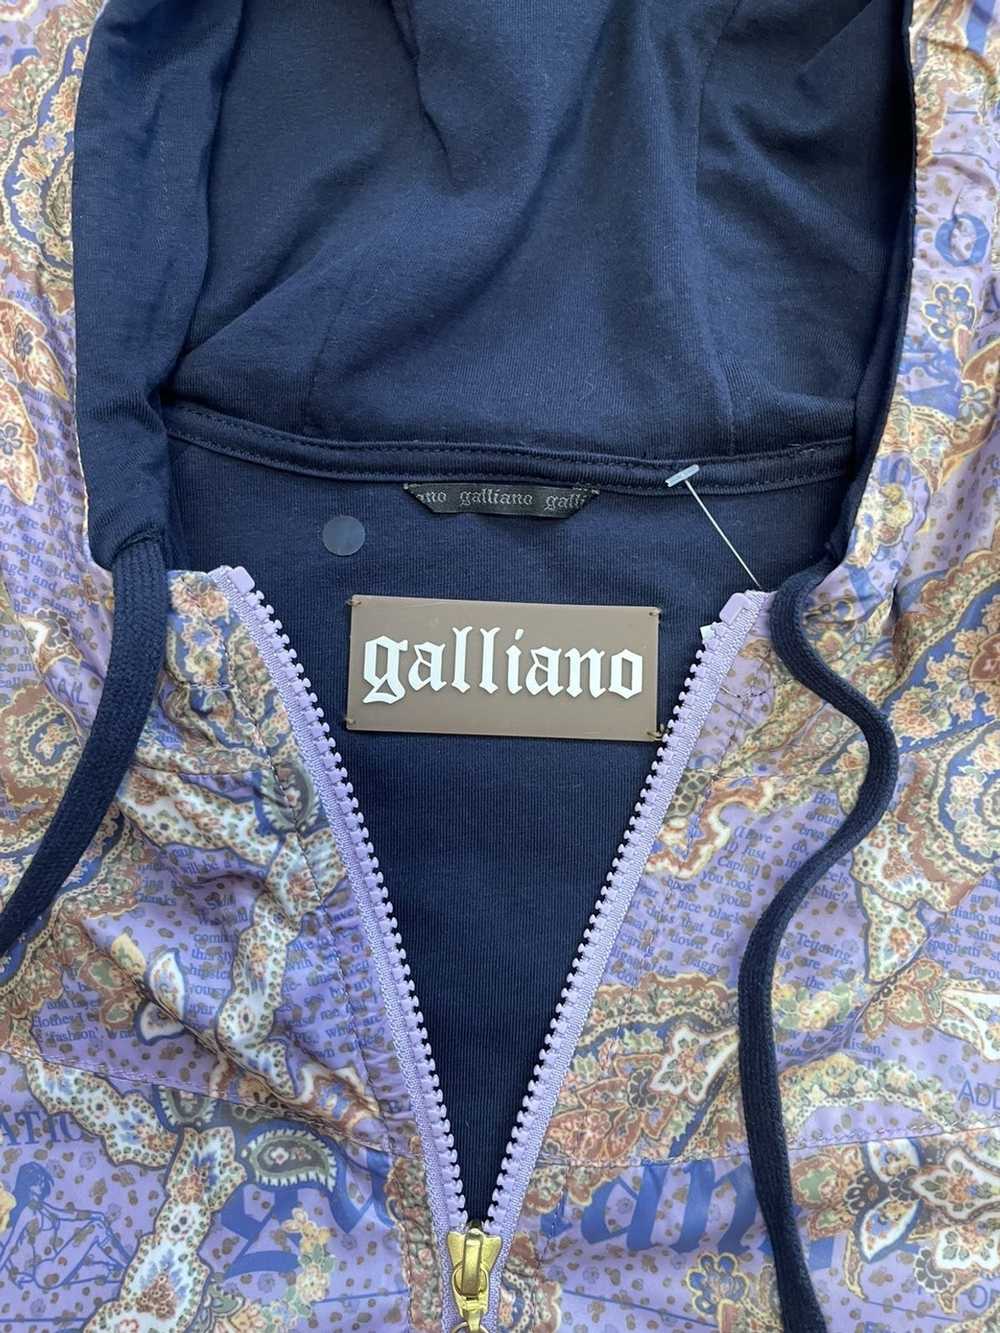 Galliano Galliano Paisley Bomber Jacket - image 2